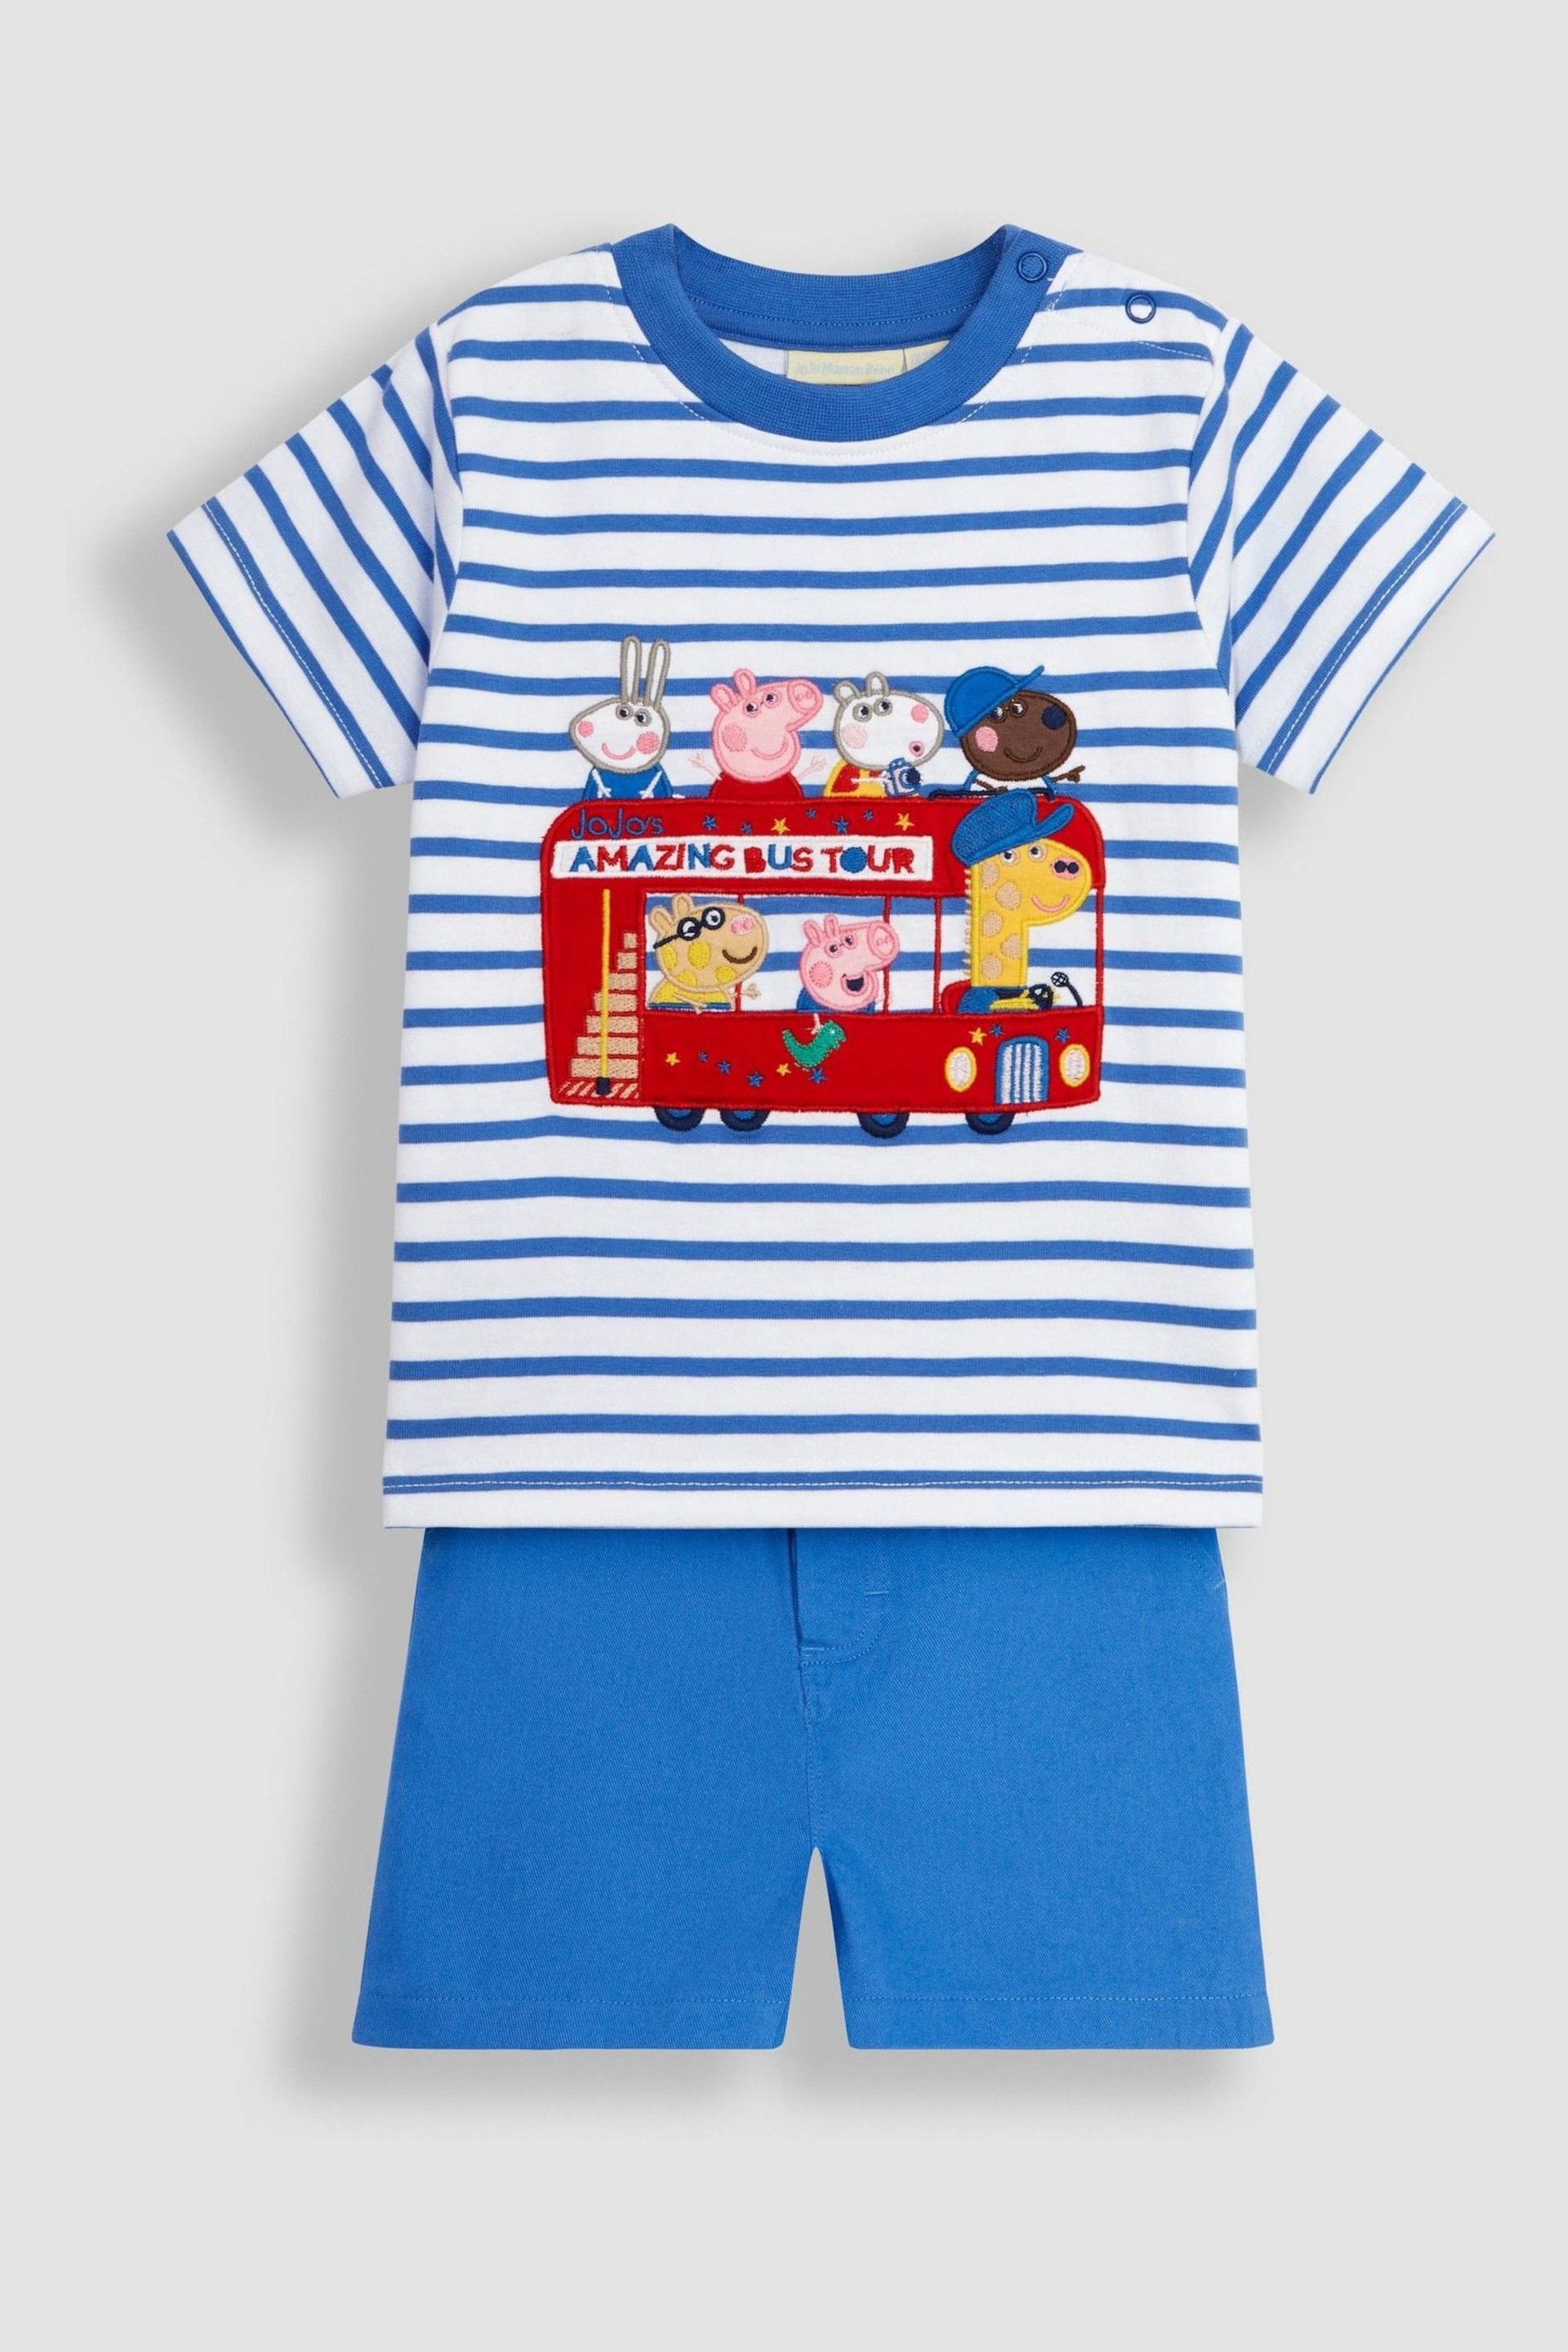 JoJo Maman Bébé Blue 2-Piece Peppa Pig Appliqué T-Shirt & Shorts Set - Image 2 of 3